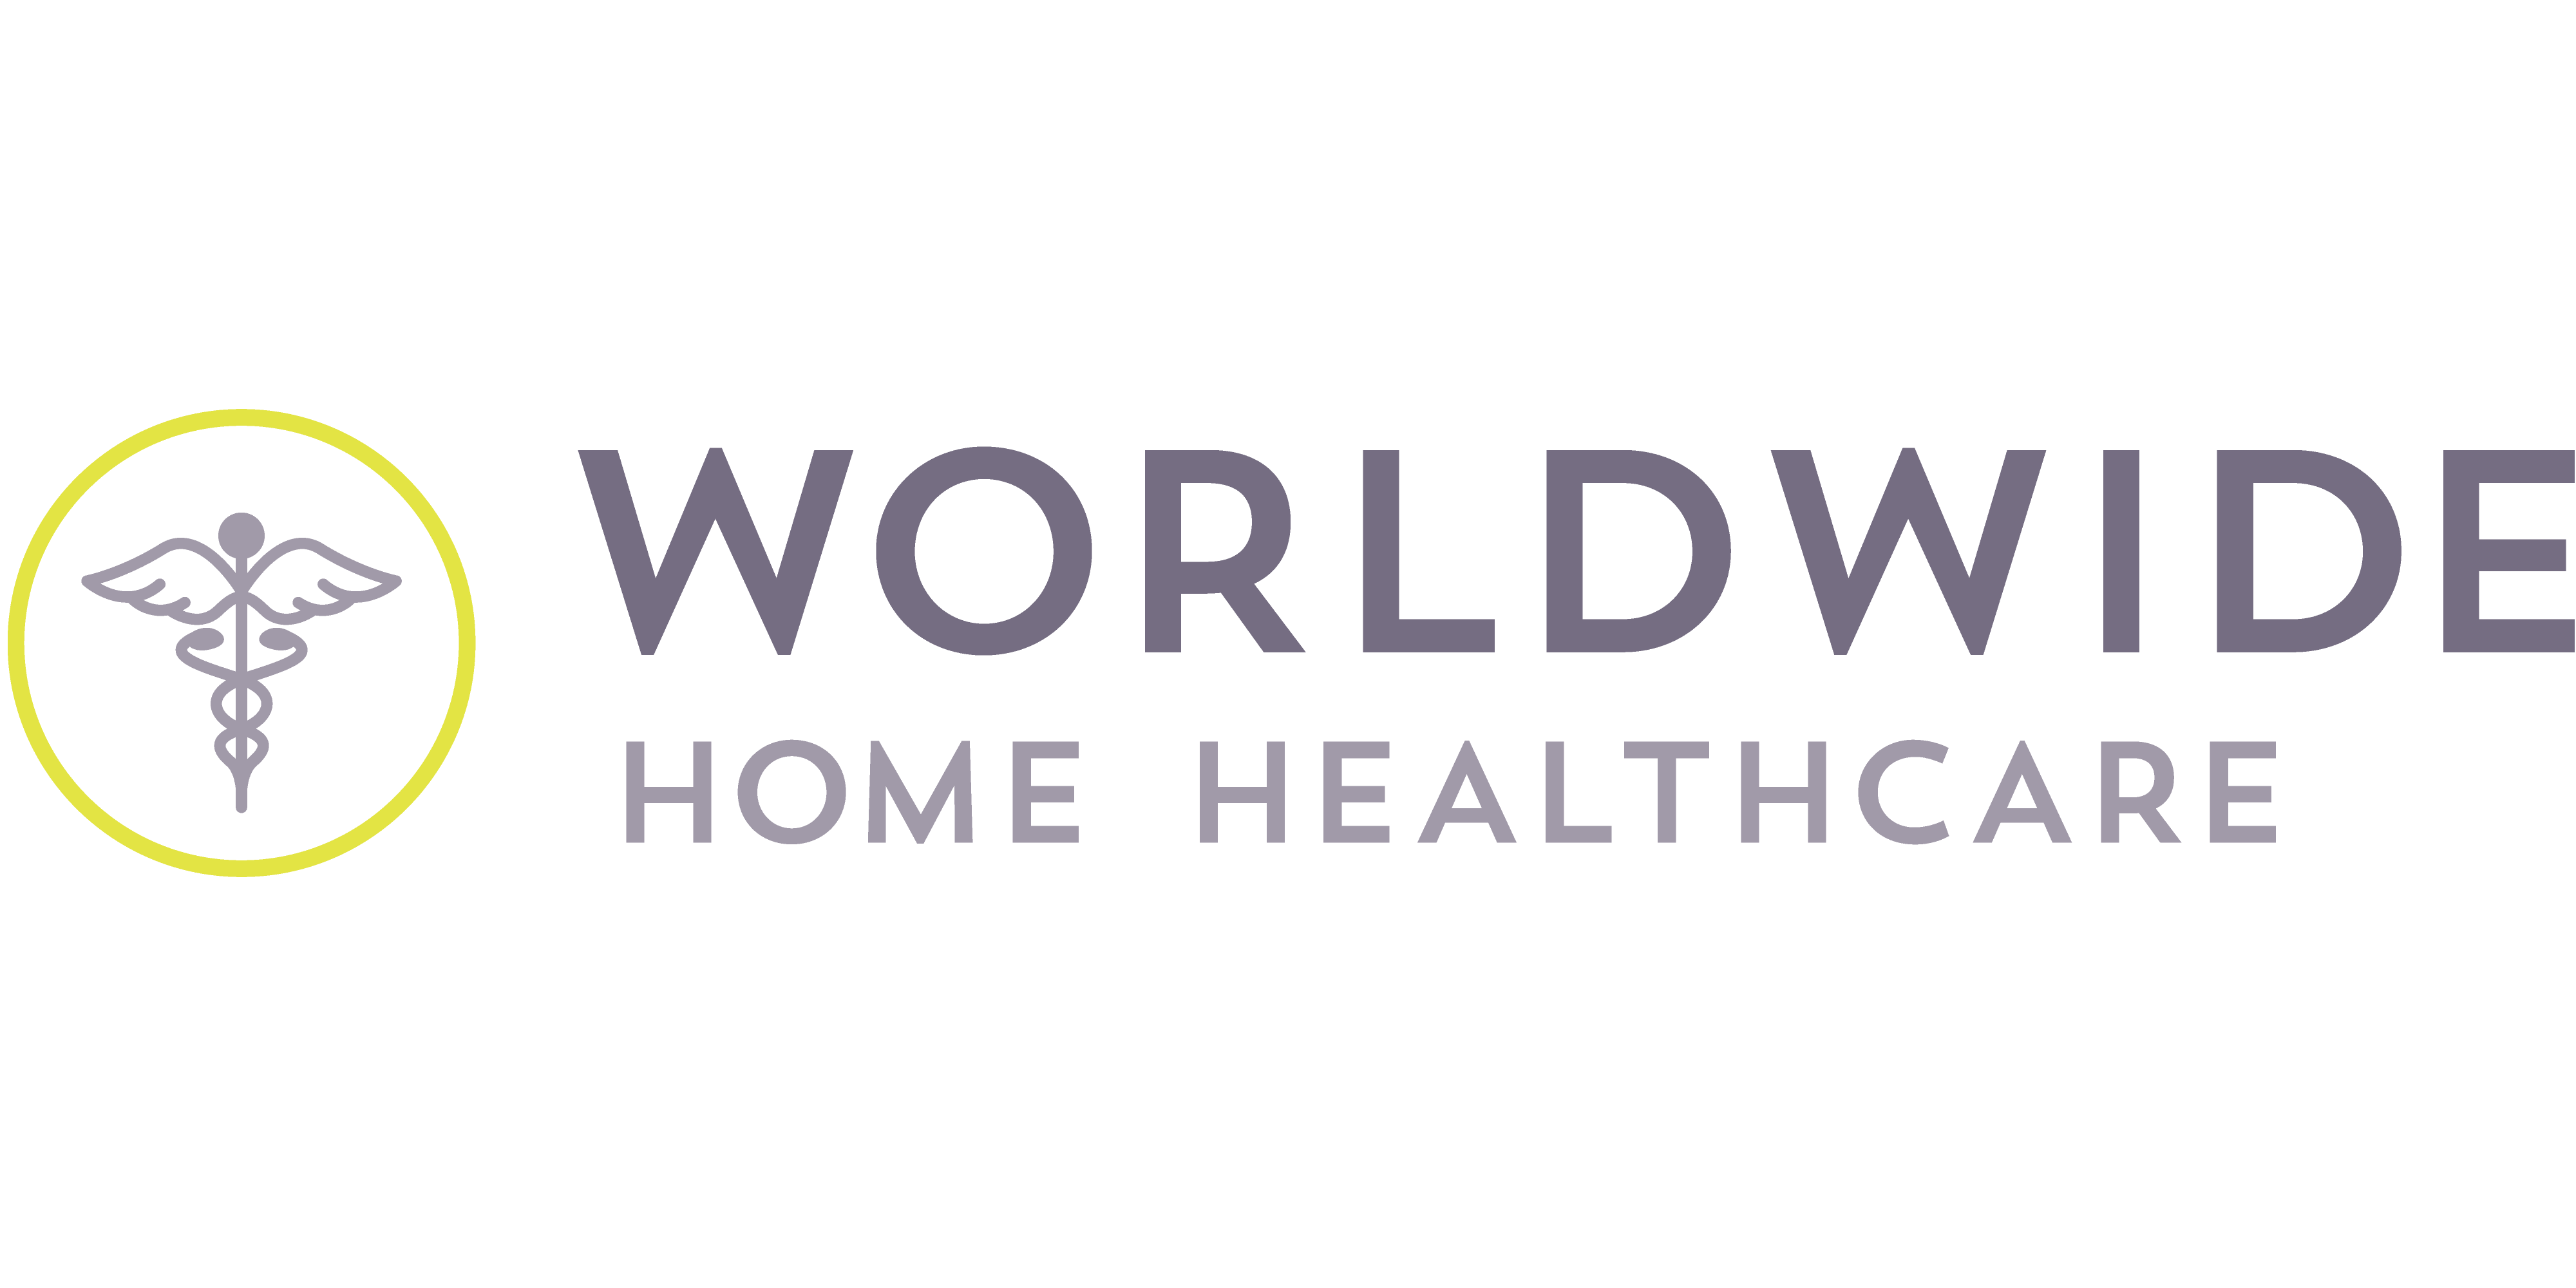 Worldwide Home Healthcare